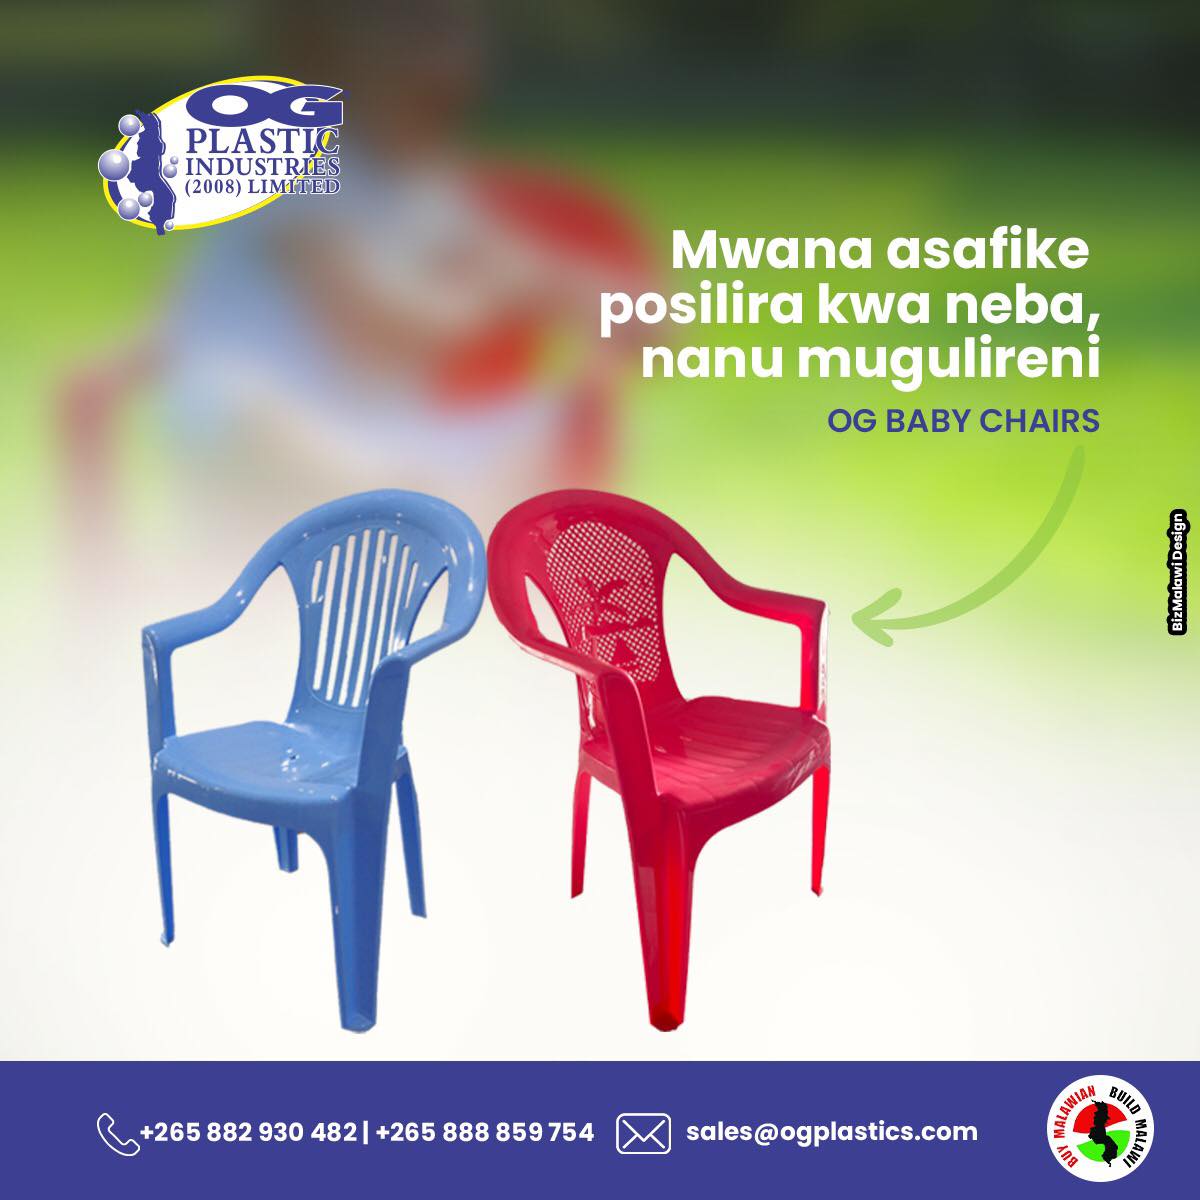 Mwana nayenso akufunika mpando wake. Mugulireni lero ku OG Plastics.
More info: bizmalawi.com/listing/og-pla…
#OGBabyChairs #BabyEssentials